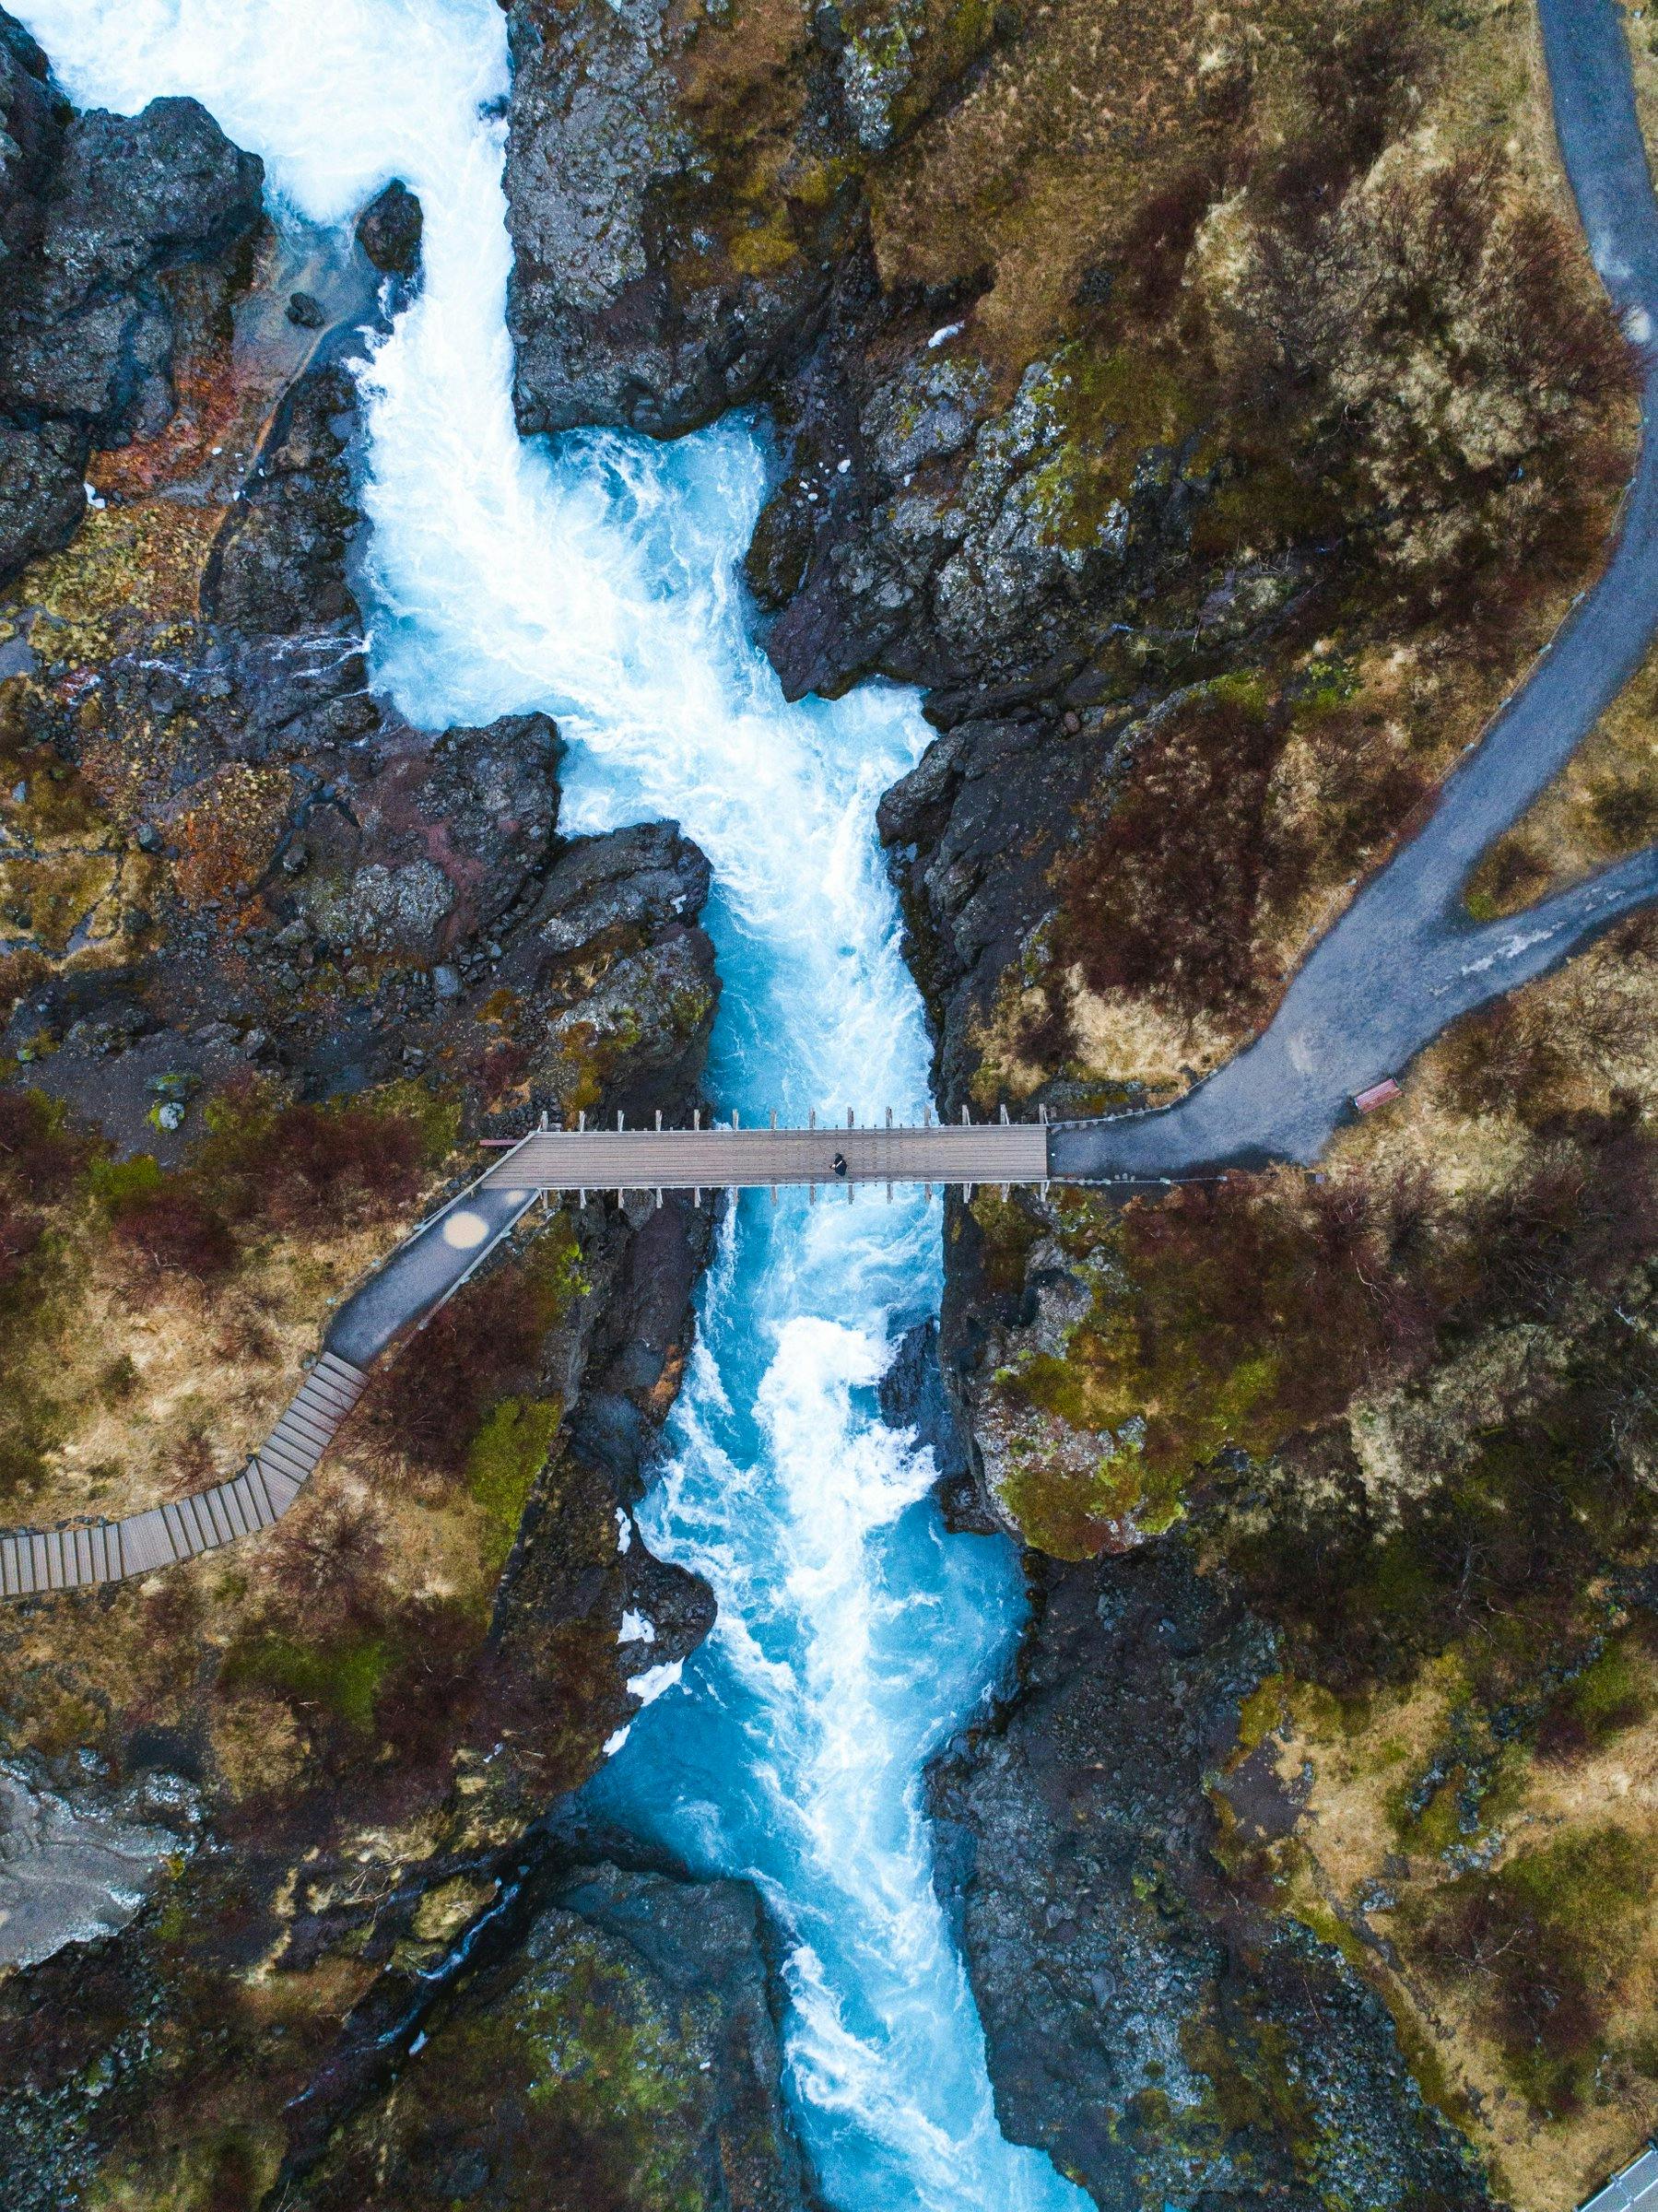 Barnafoss waterfalls and the bridge leading over it